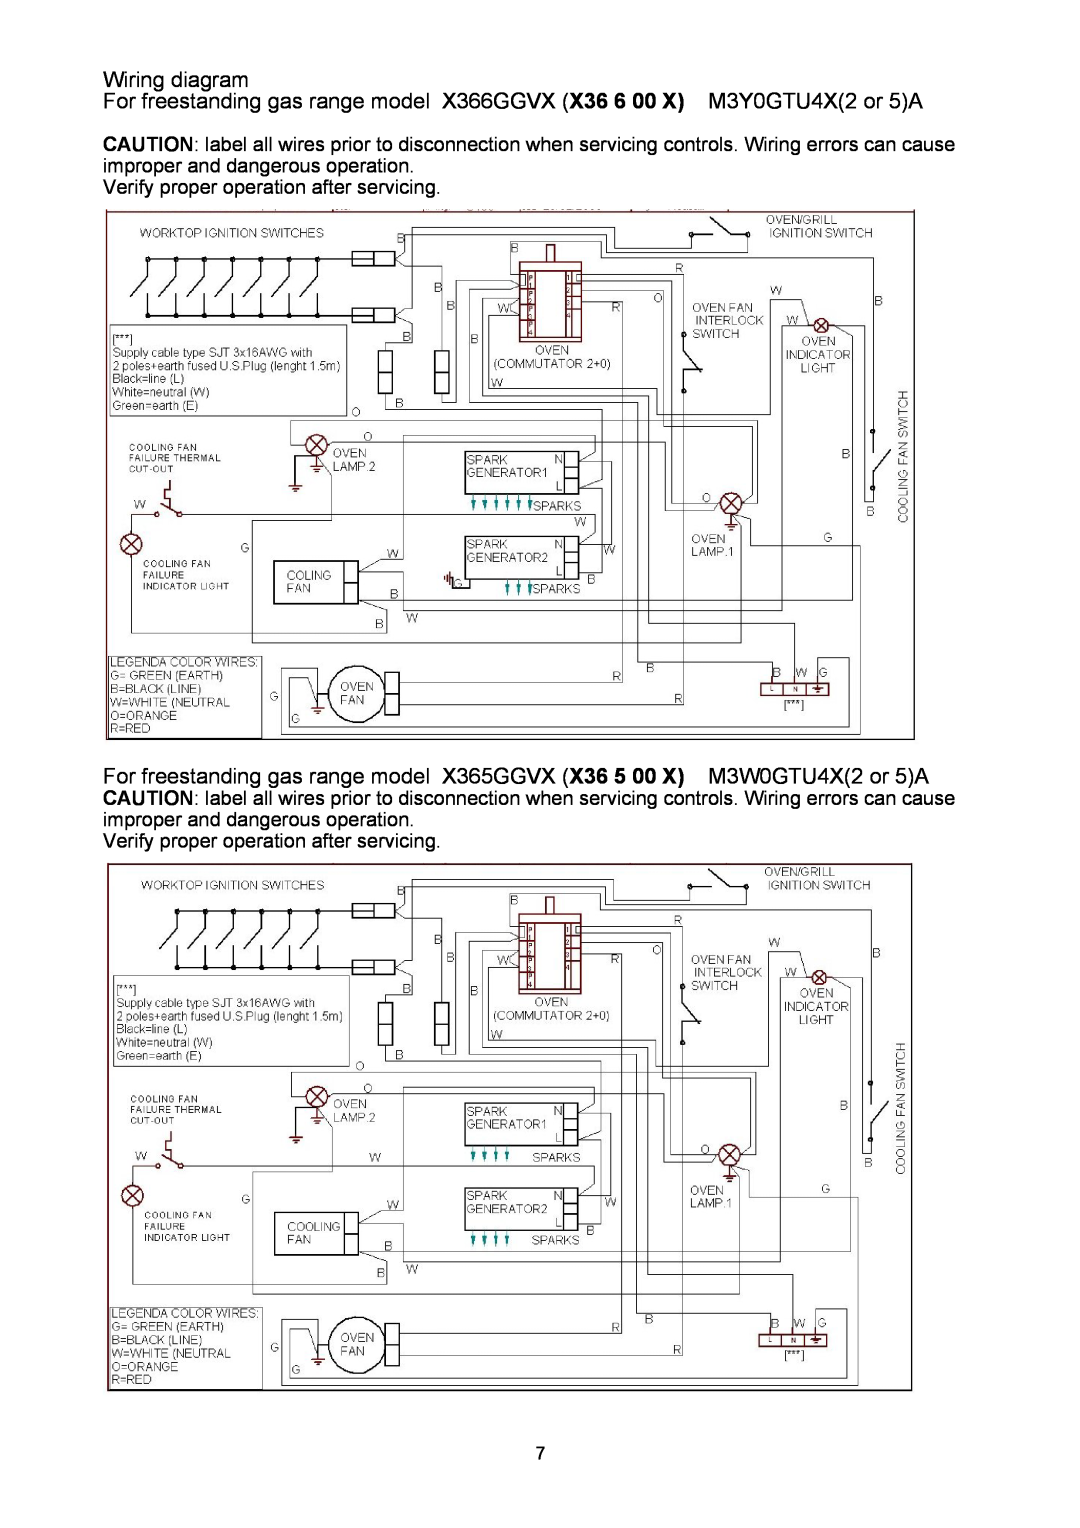 Bertazzoni X366GGVX (X36 6 00 X) Wiring diagram, For freestanding gas range model X366GGVX X36 6 00 X M3Y0GTU4X2 or 5A 